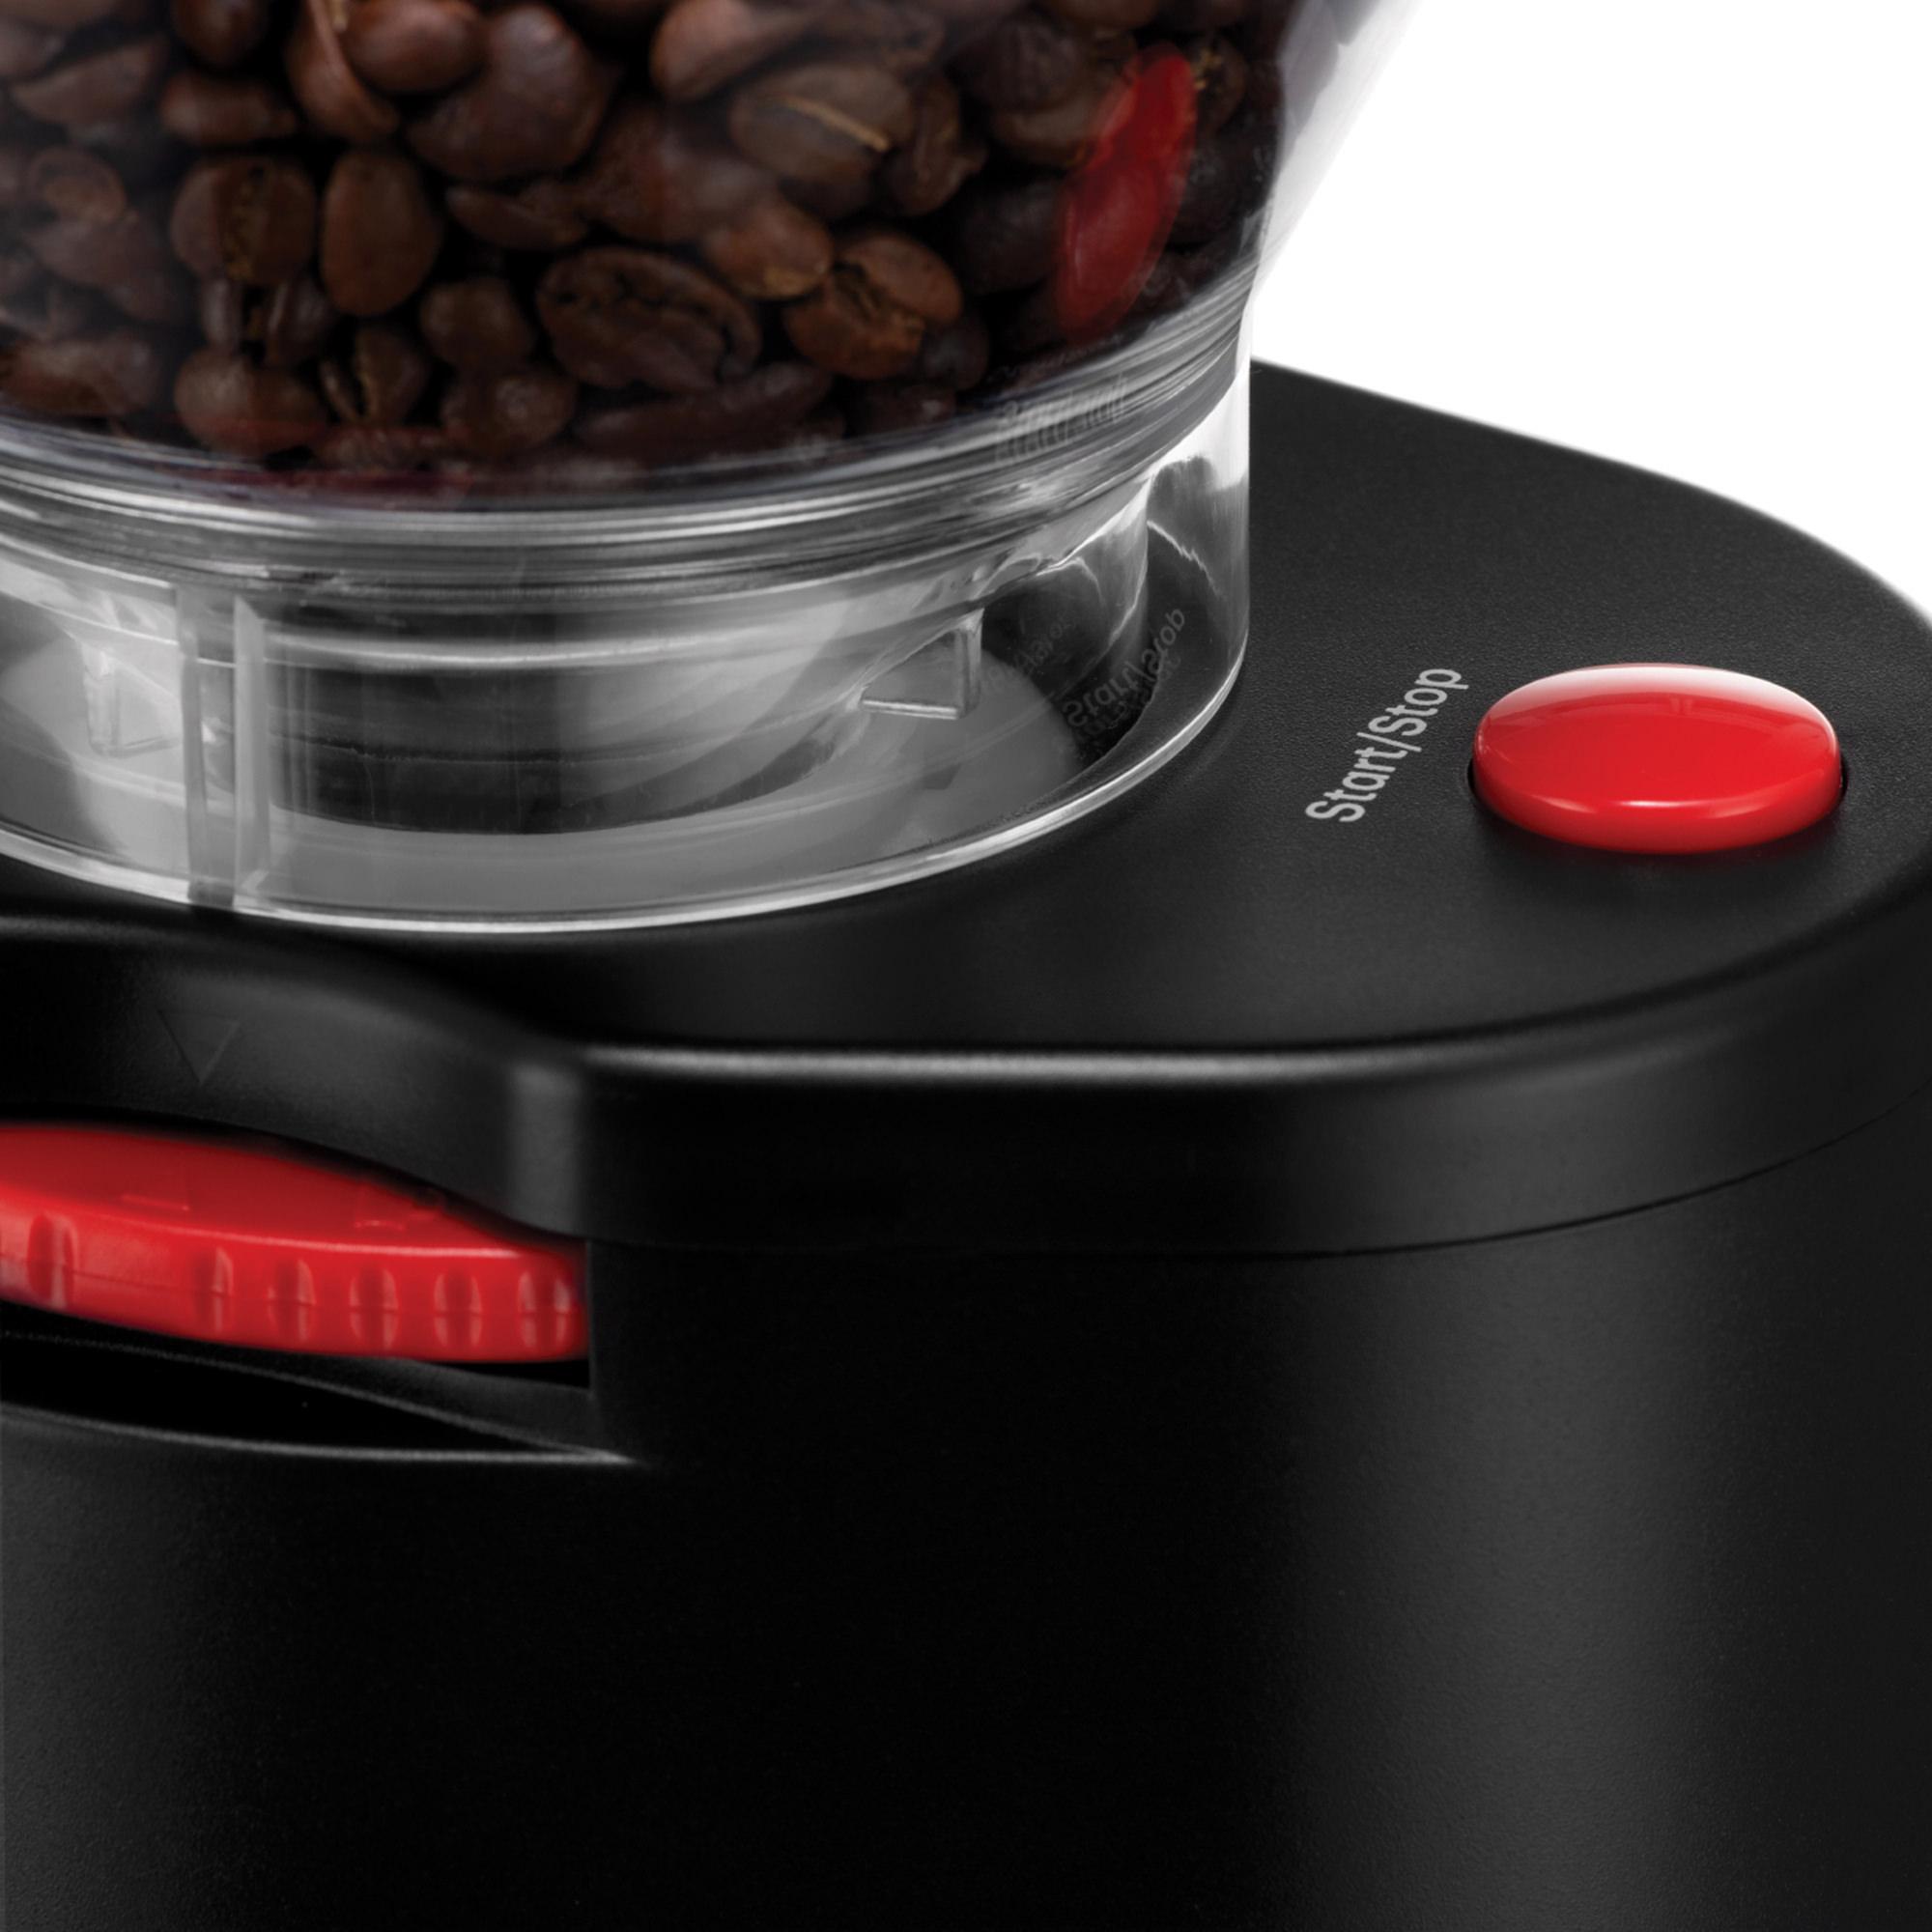 Bodum Bistro Electric Coffee Grinder Black Image 4